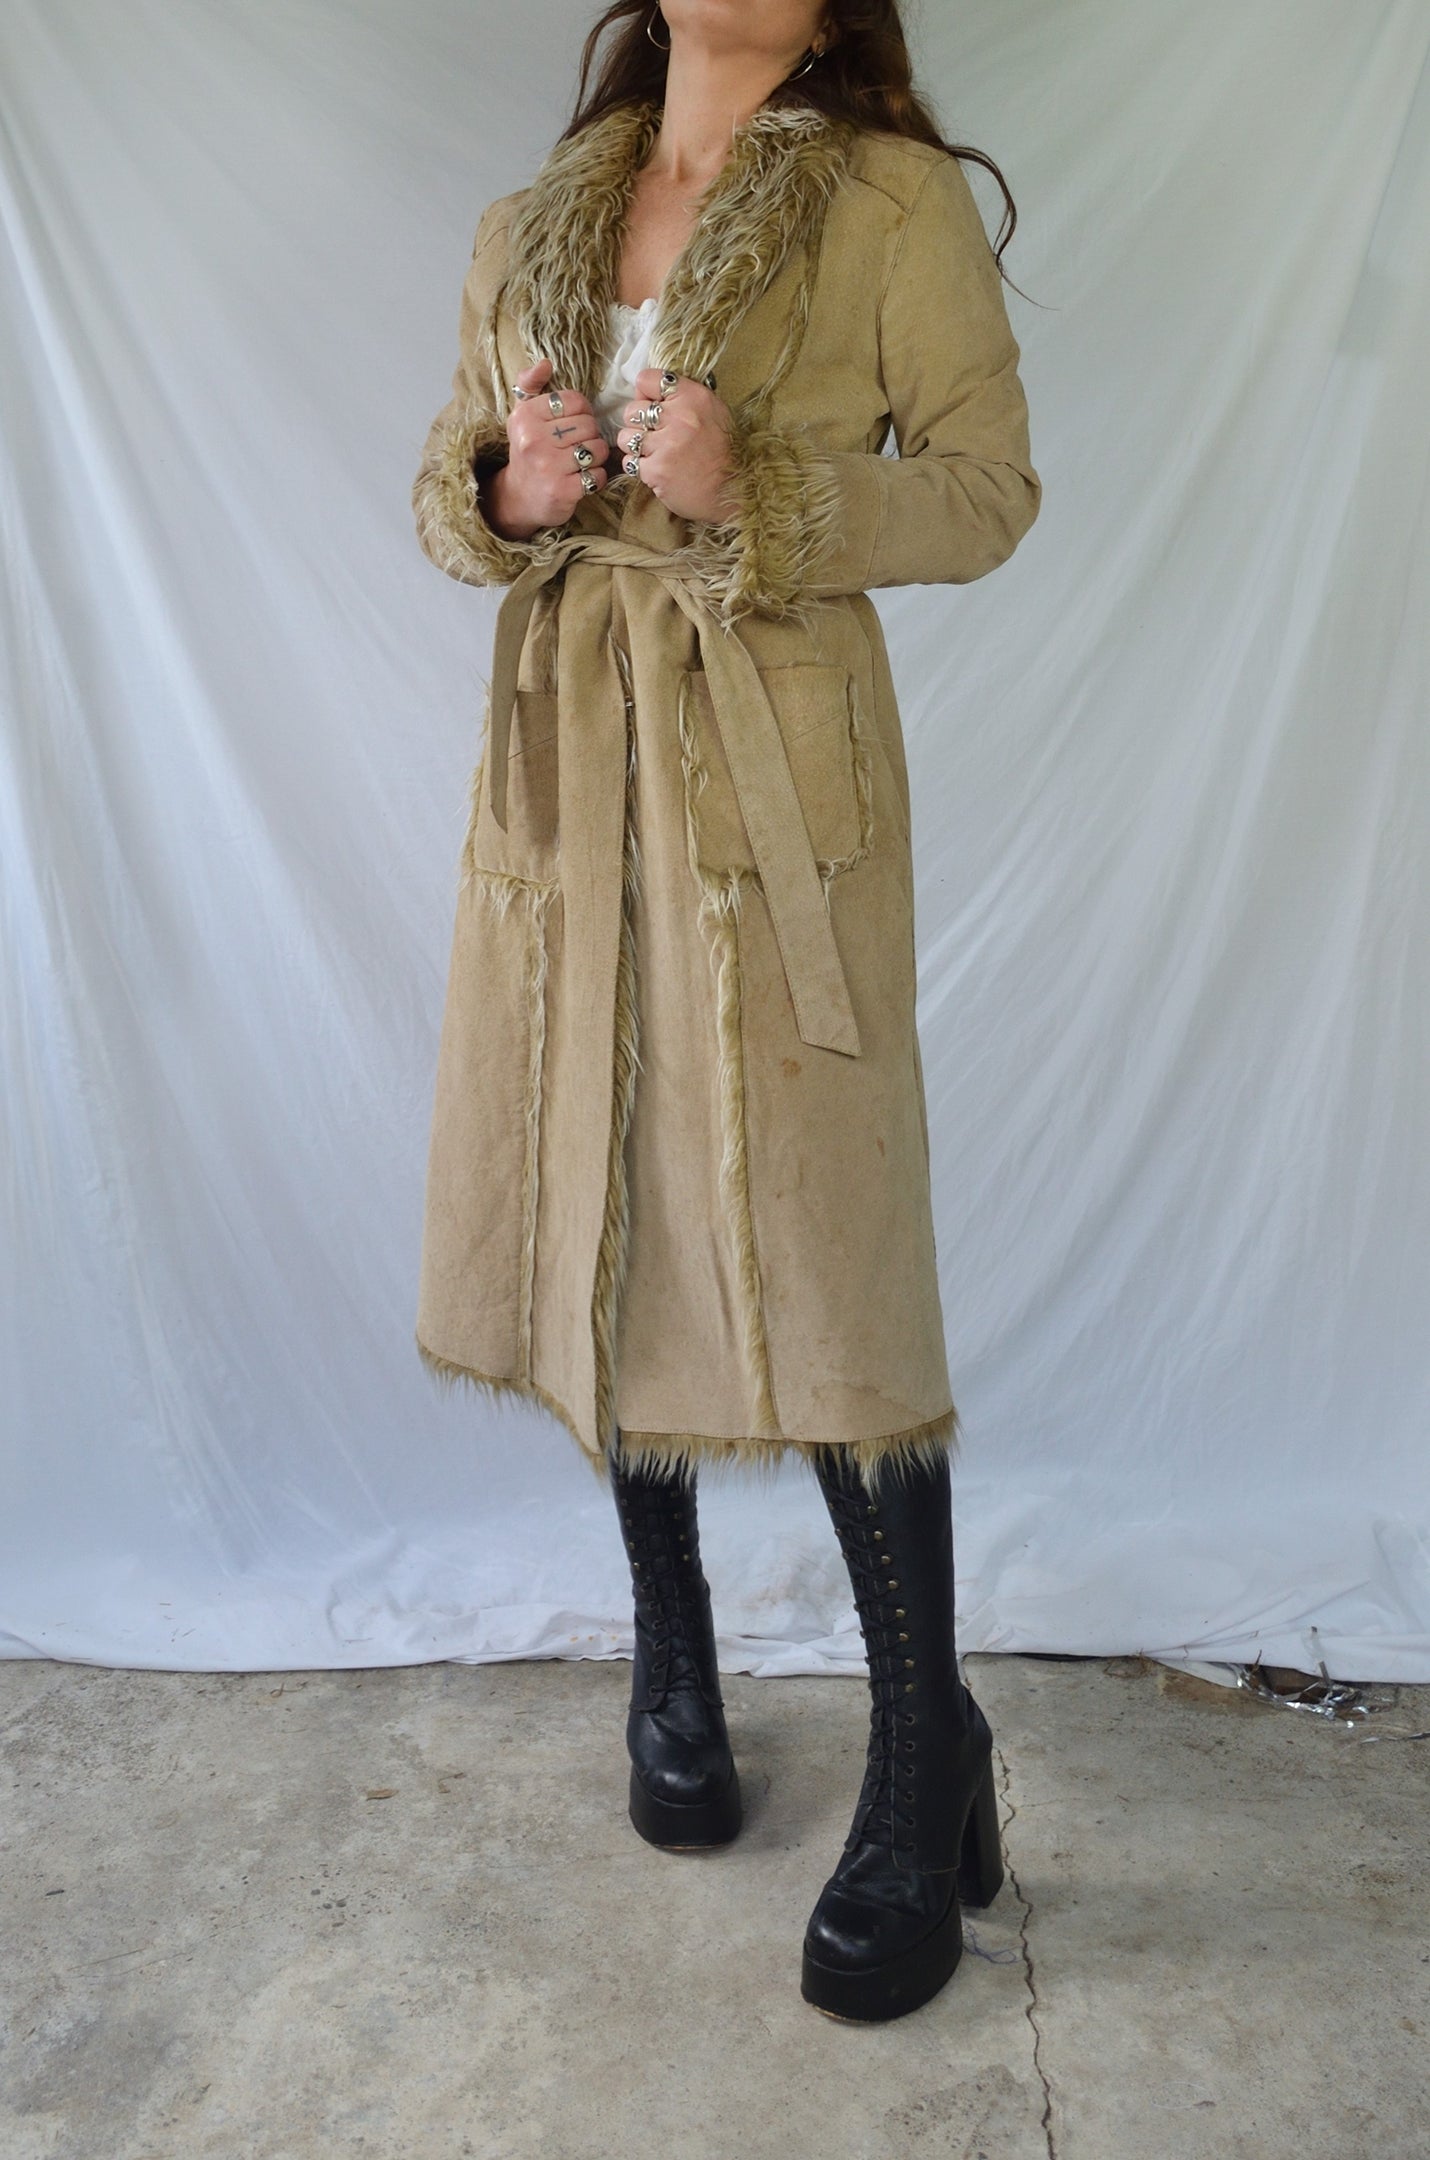 Penny Lane Suede Coat Made to Order Shearling Coat Afgan 